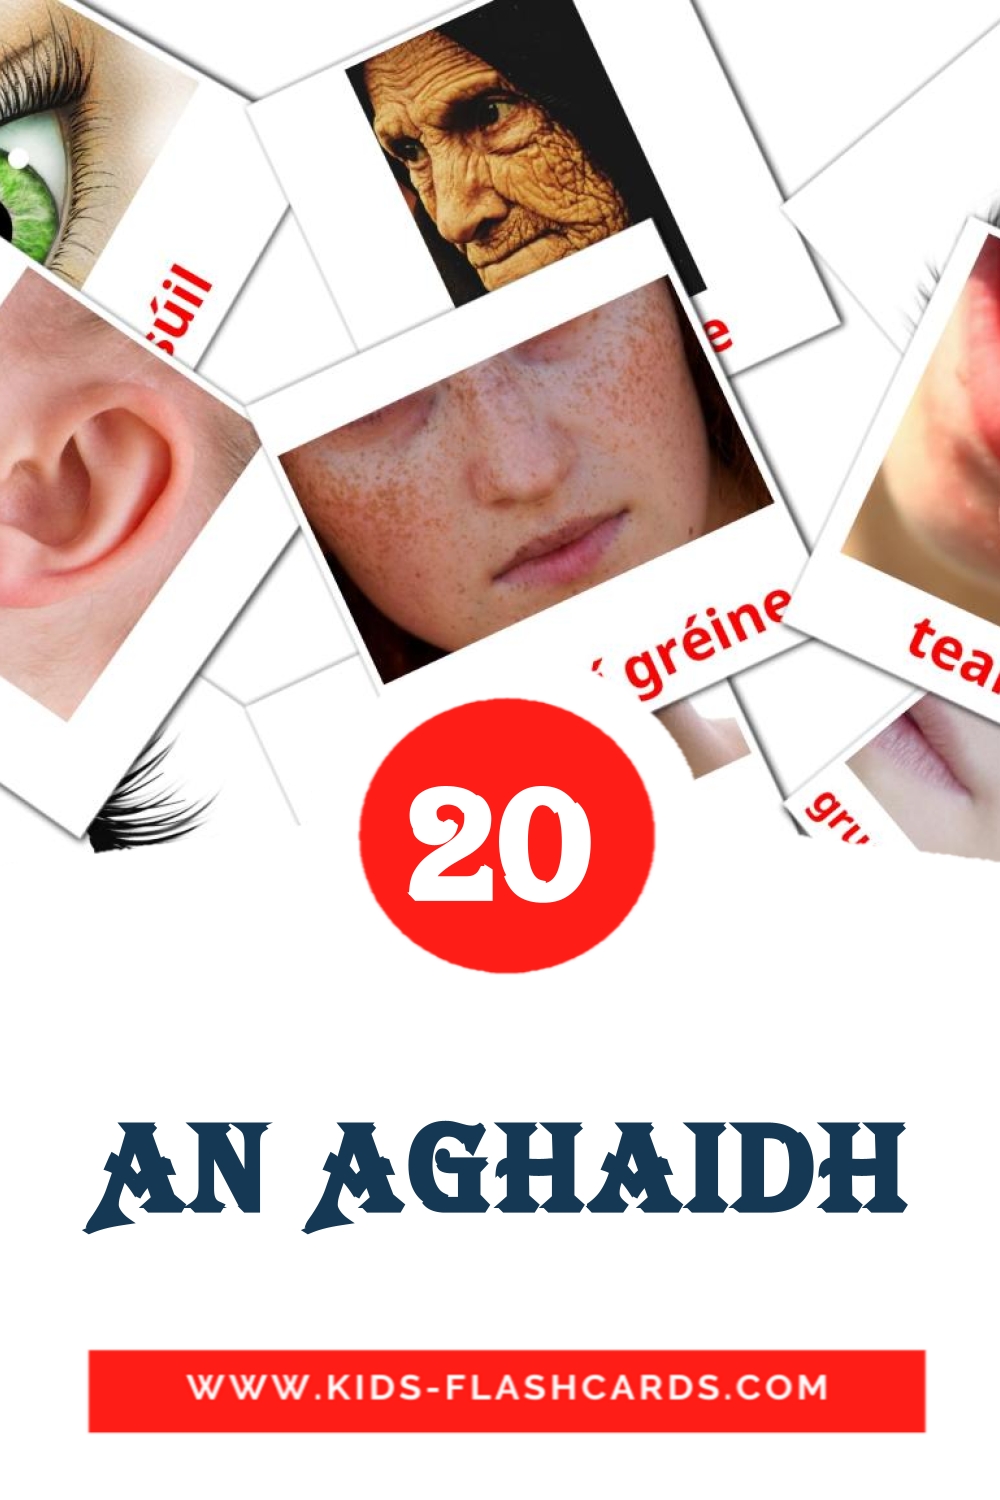 20 carte illustrate di An Aghaidh per la scuola materna in irlandesi